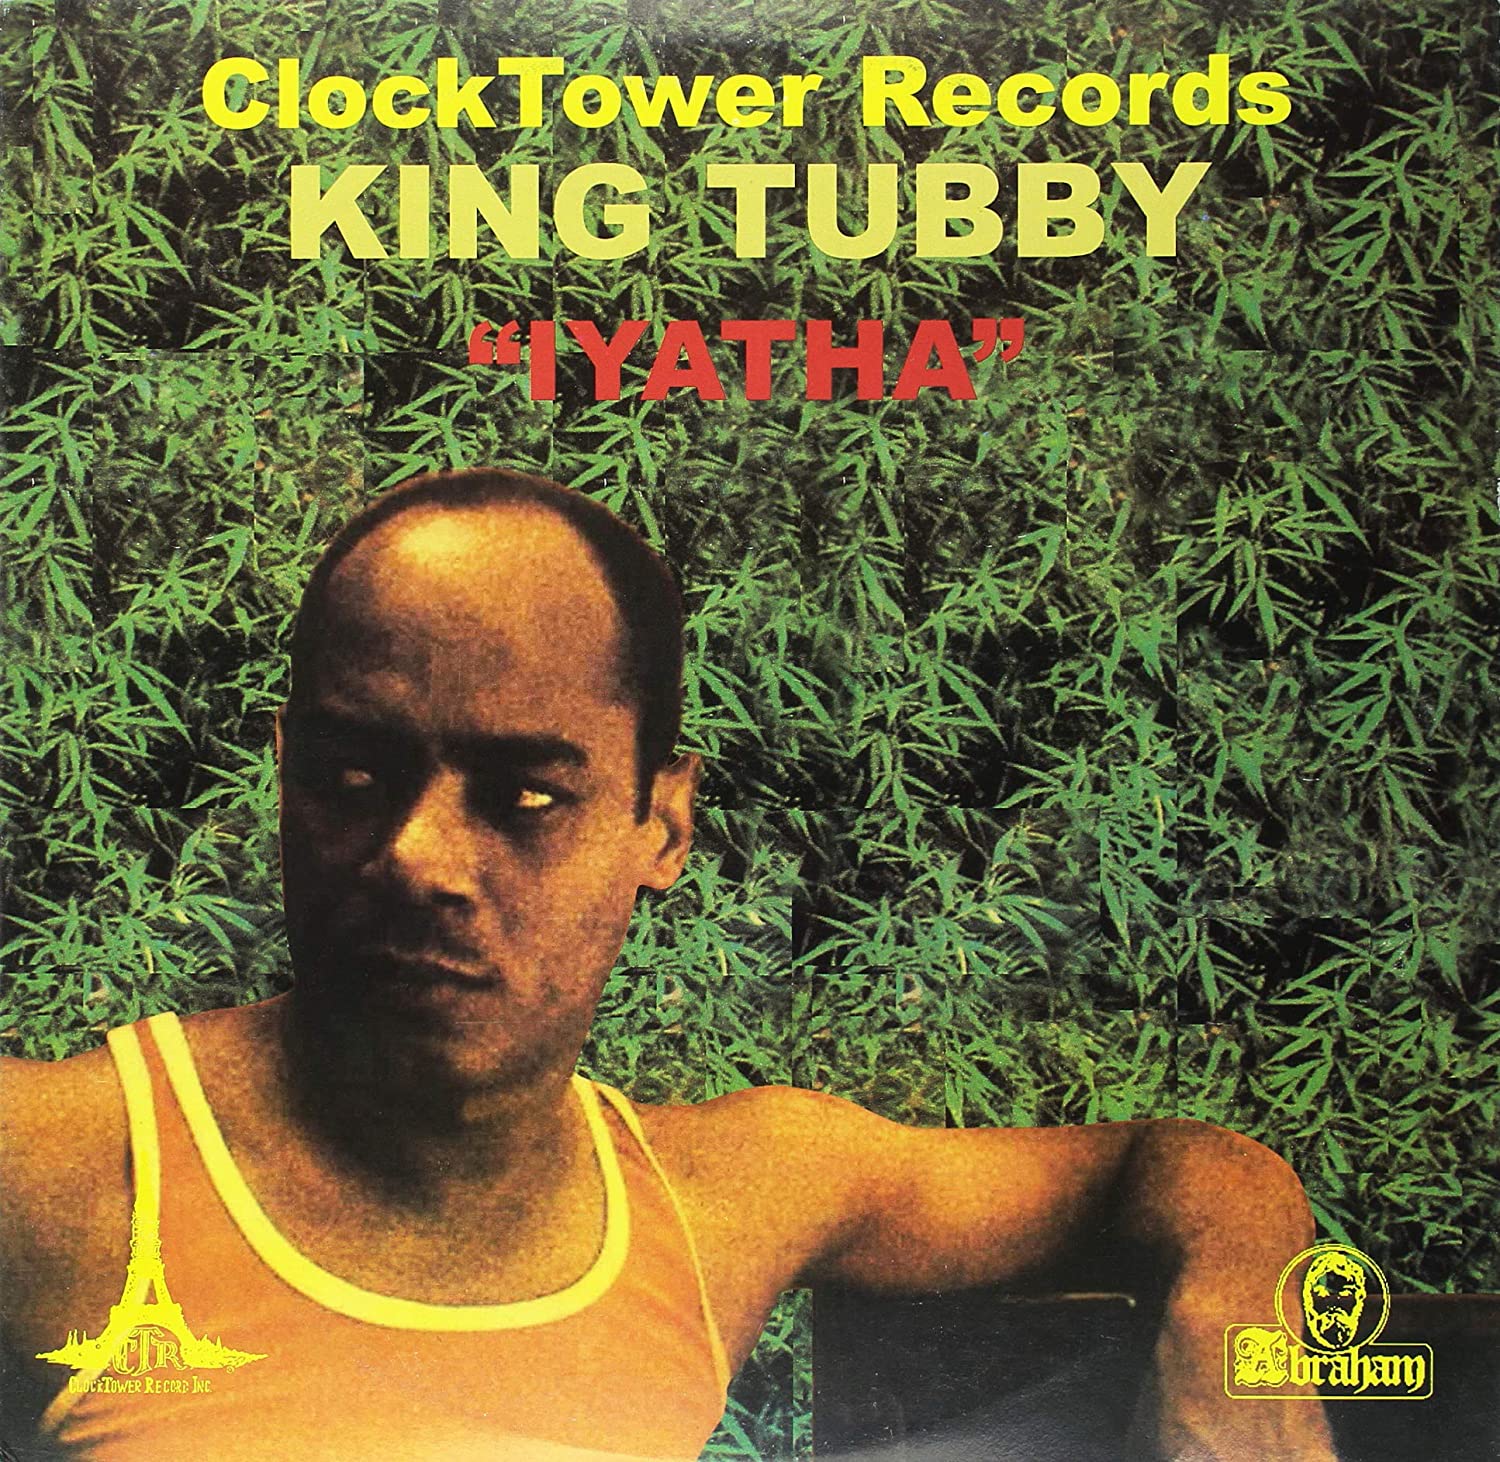 KING TUBBY - IYATHA Vinyl LP